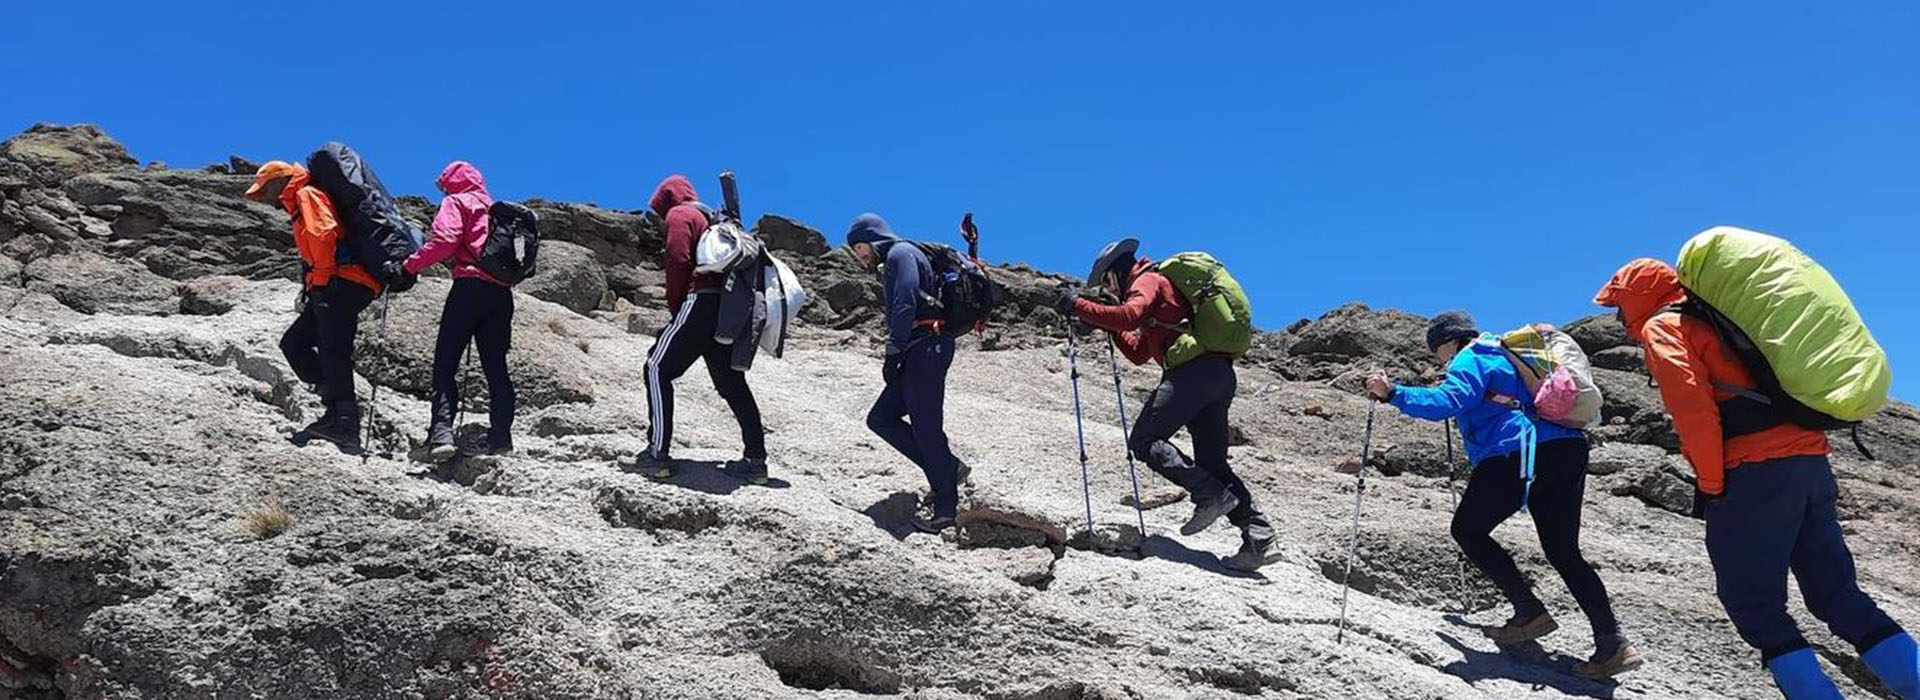 Kilimanjaro Porters